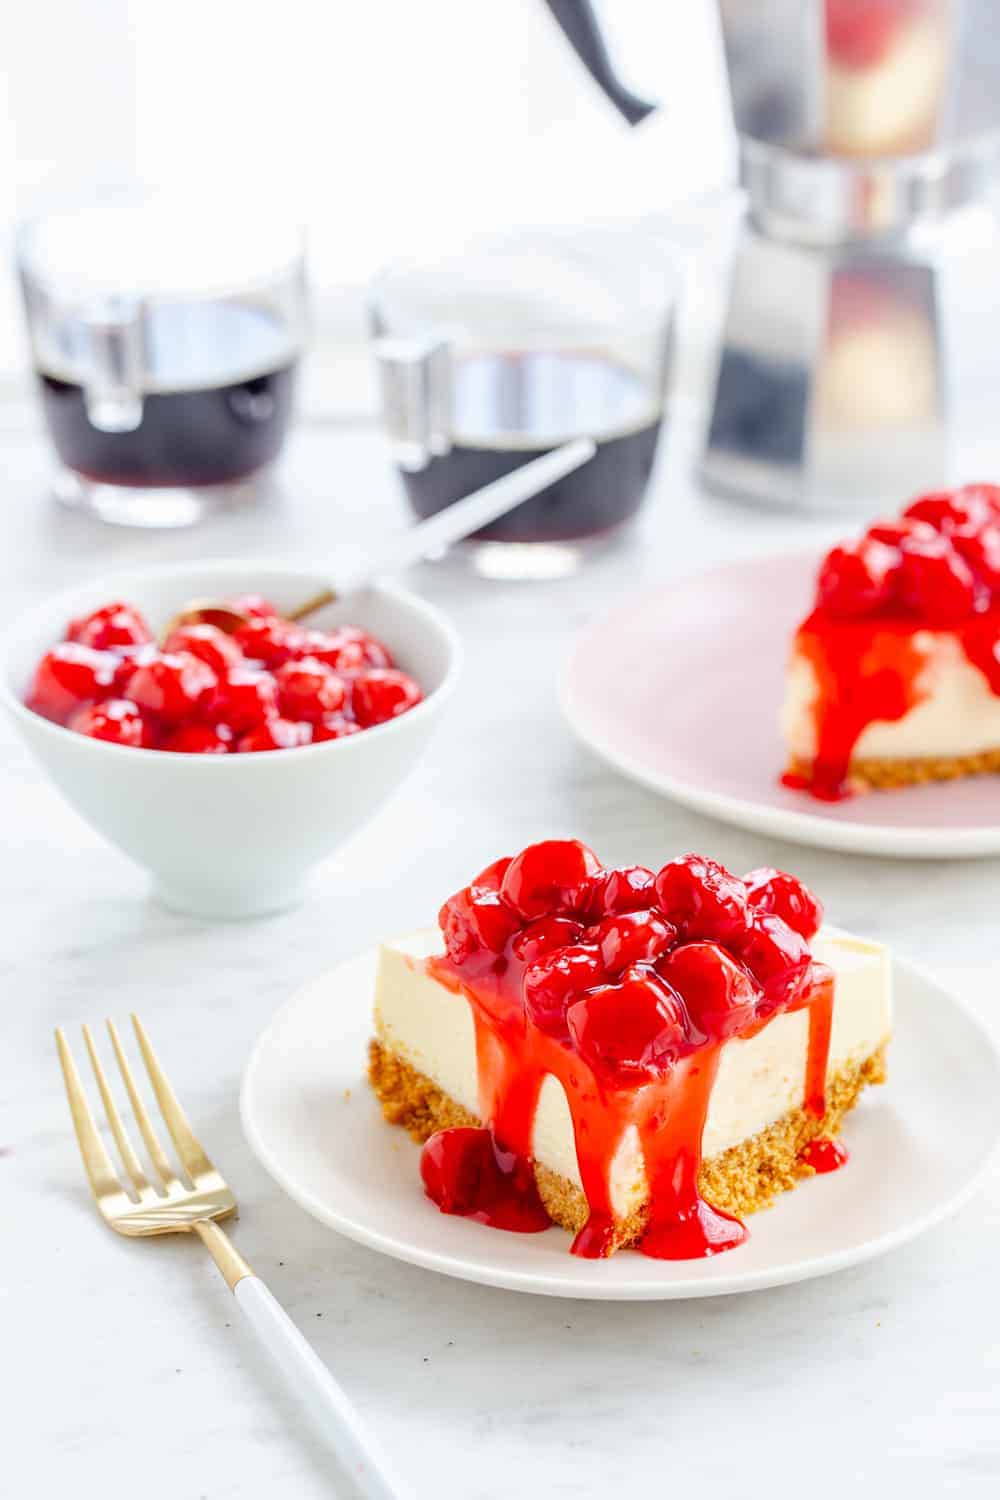 Instant Pot Cheesecake - Creamy & Delicious! - Julie's Eats & Treats ®